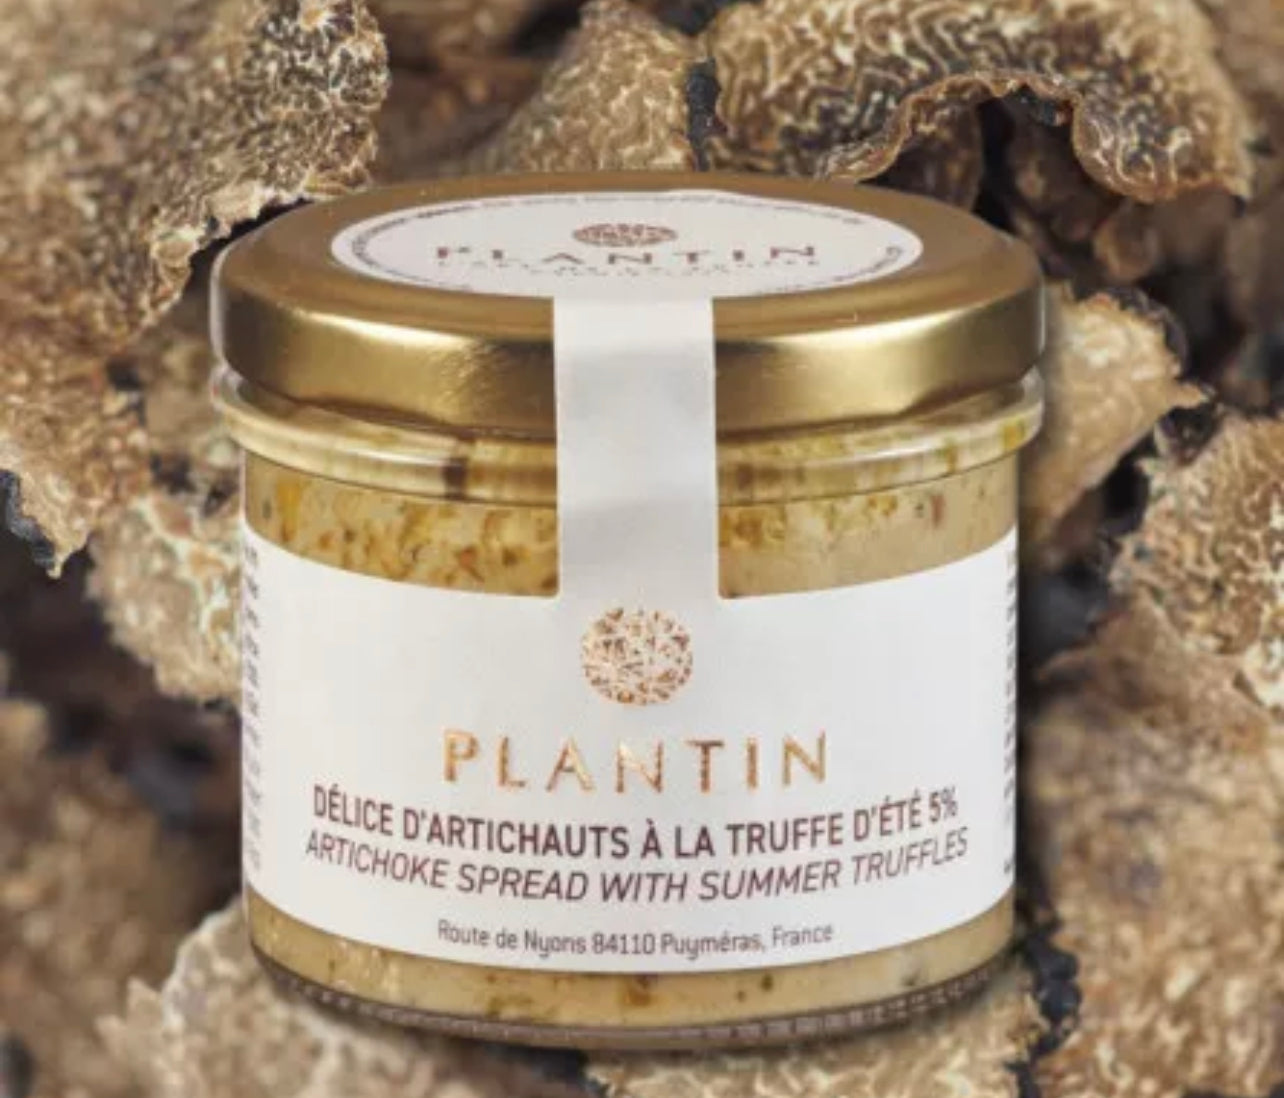 Artichoke delight with summer truffle 5% - 100g